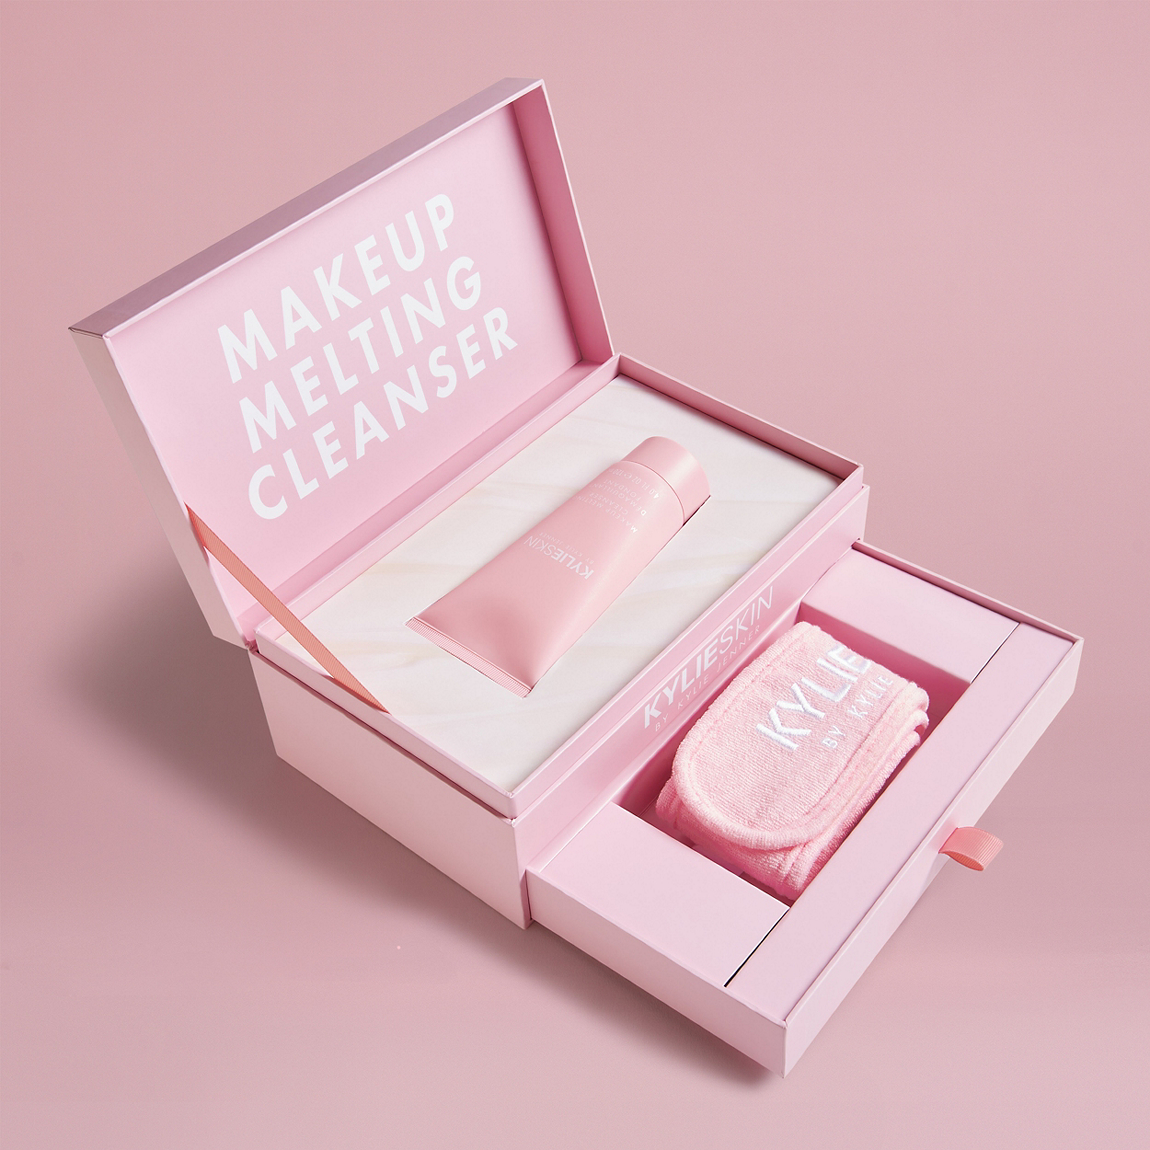 Makeup Melting Cleanser Gift Box